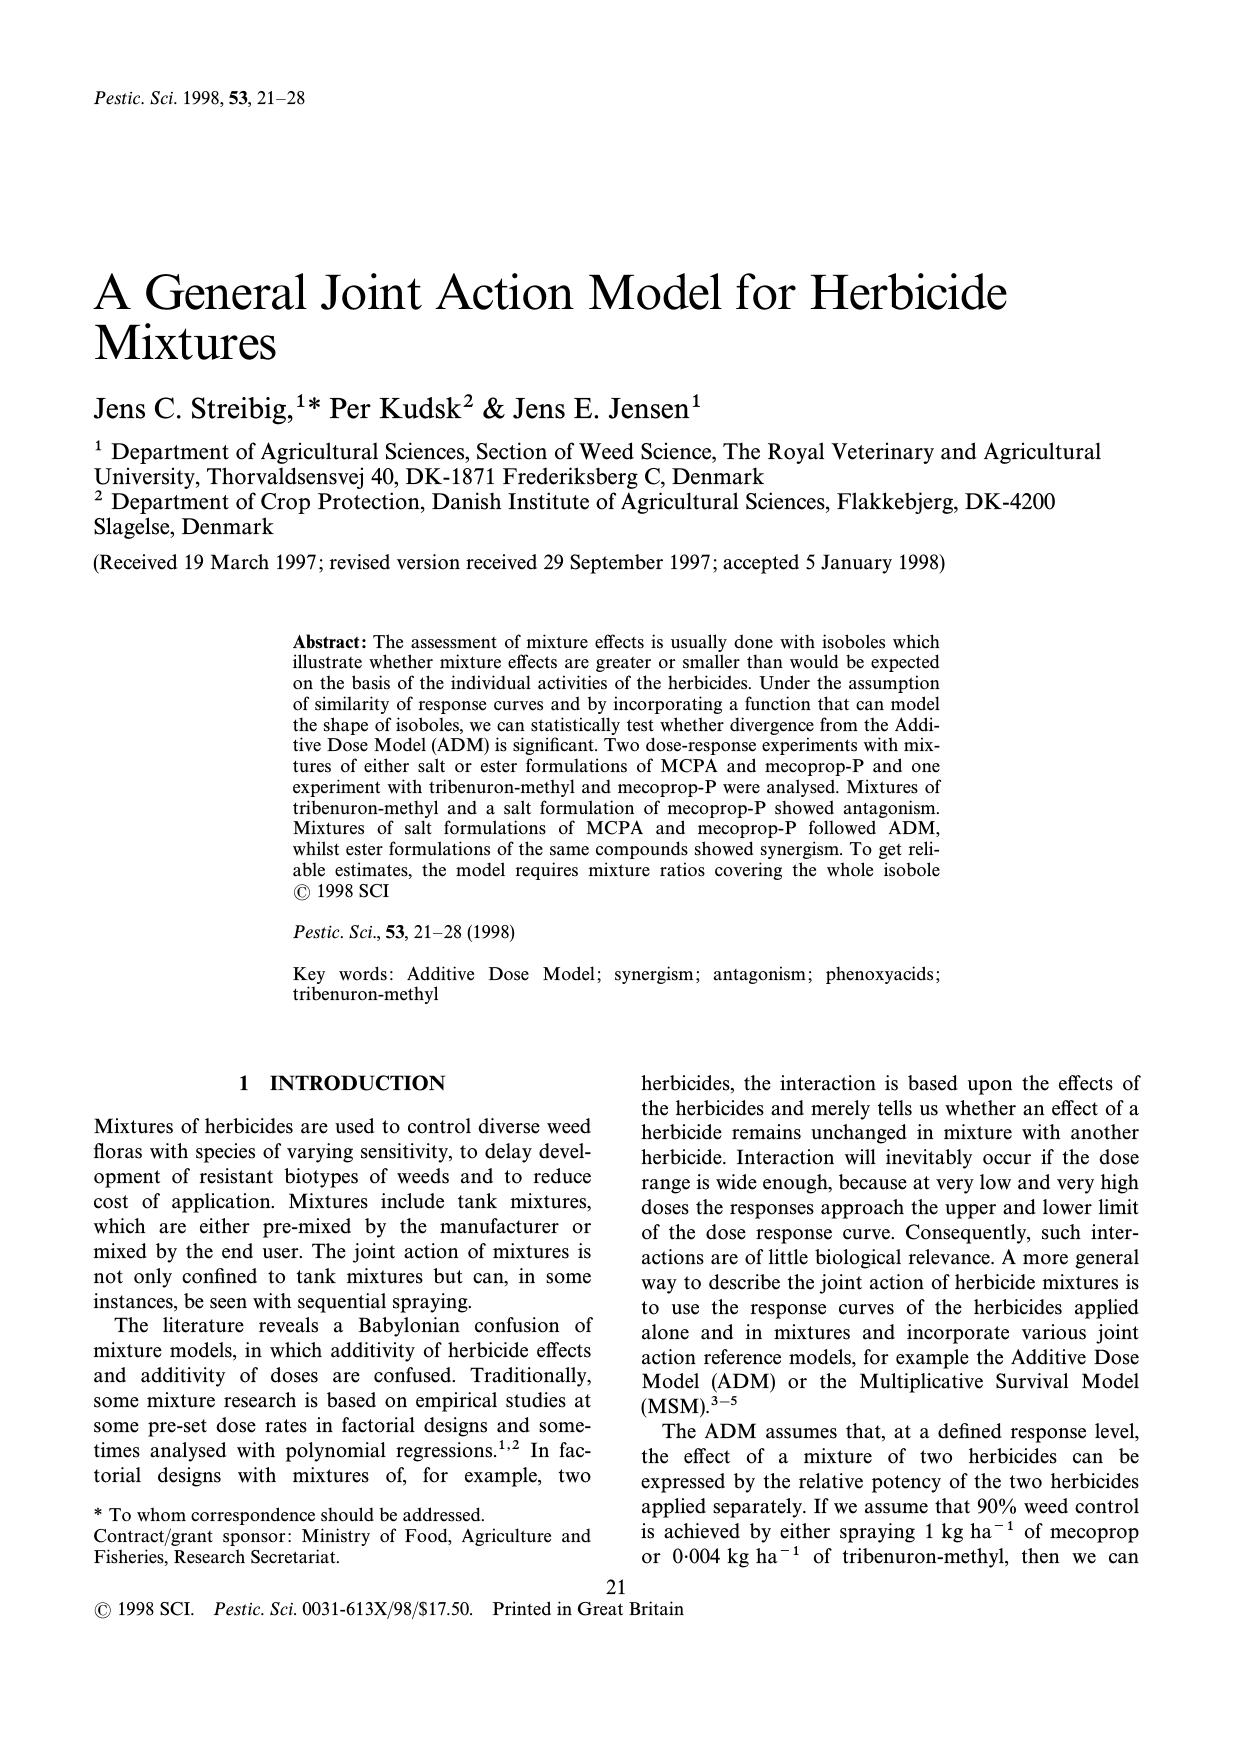 A general joint action model for herbicide mixtures by Streibig Kudsk Jensen